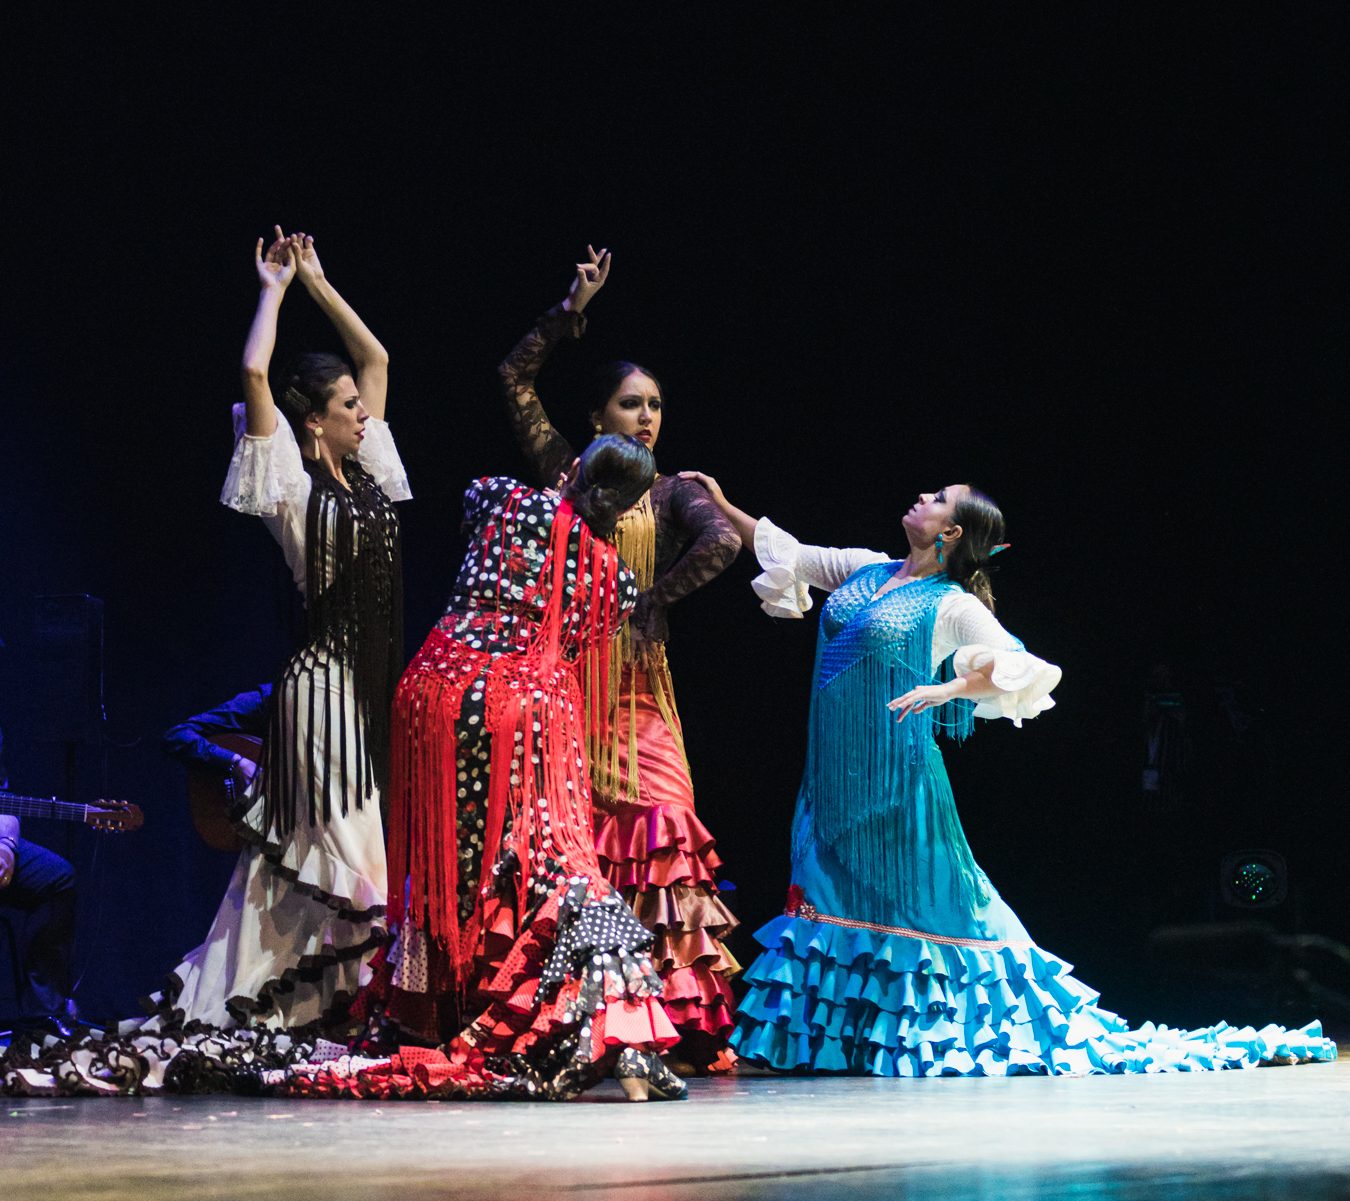 espectáculo flamenco compañía bailaora